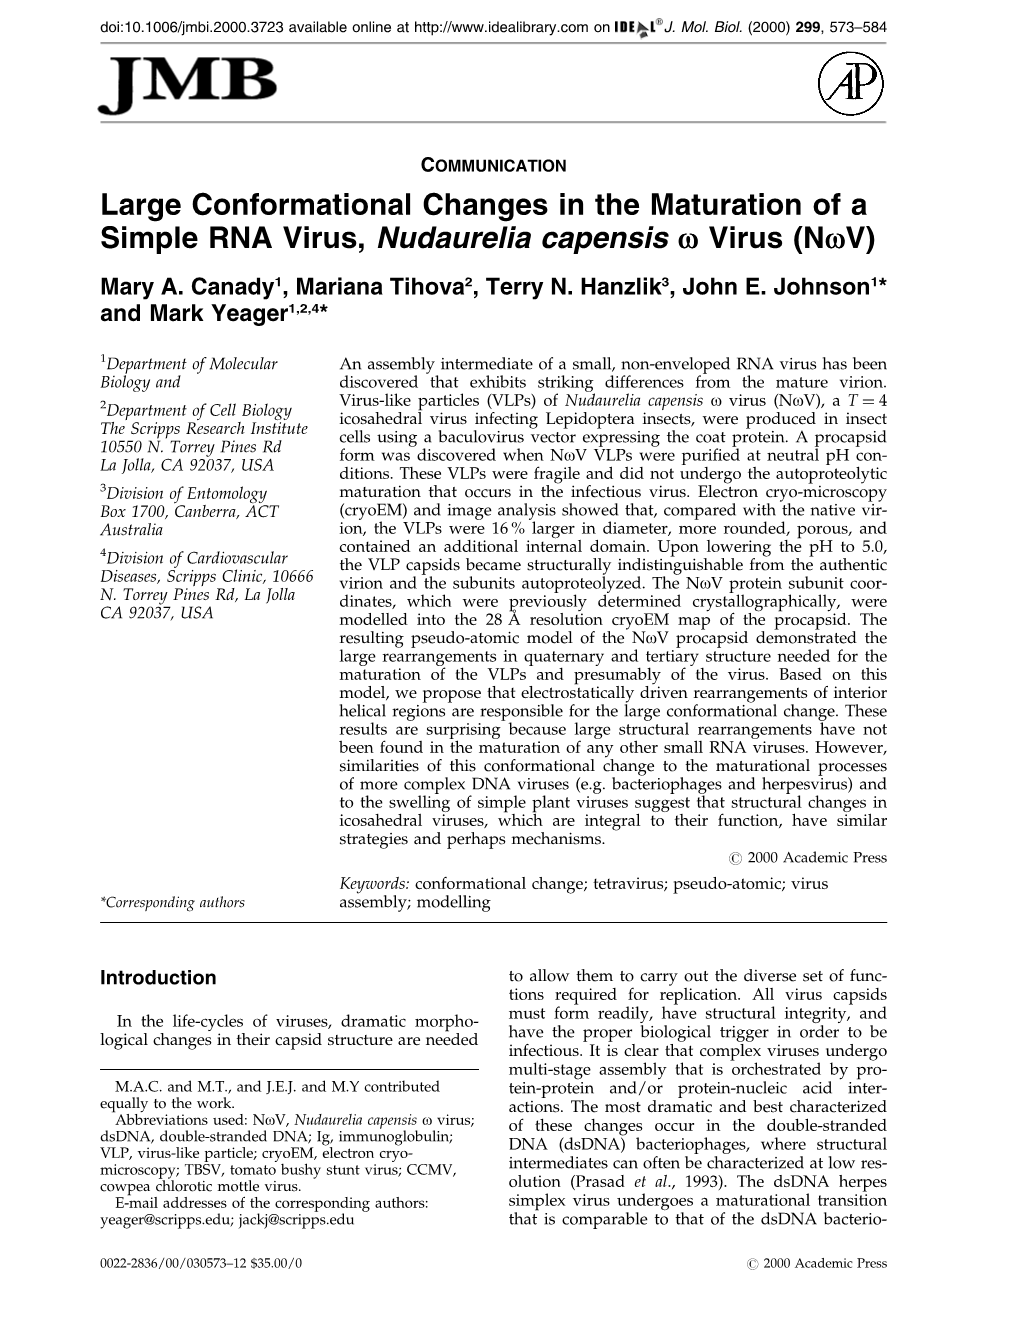 Large Conformational Changes in the Maturation of a Simple RNA Virus, Nudaurelia Capensis (Omega) Virus (N(Omega)V)